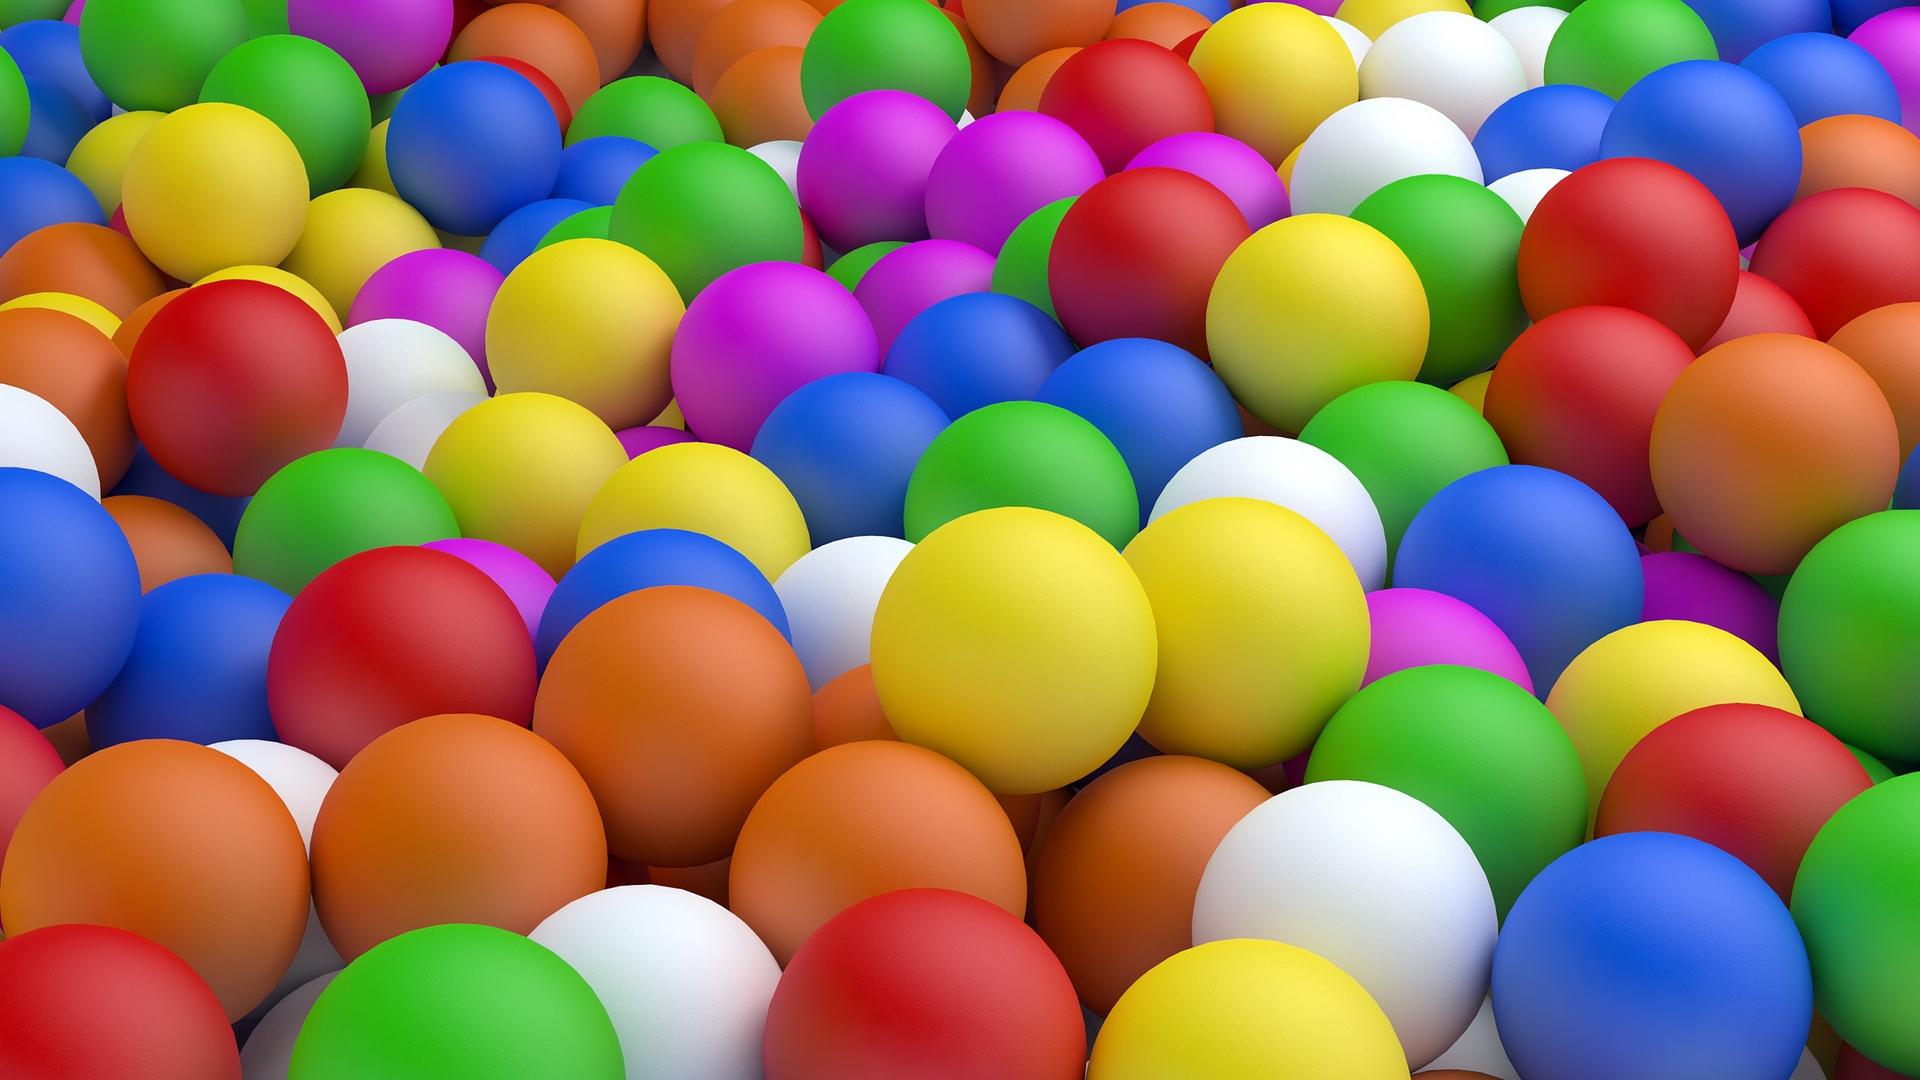 Download wallpaper 1920x1080 balls, colorful, ball full hd, hdtv